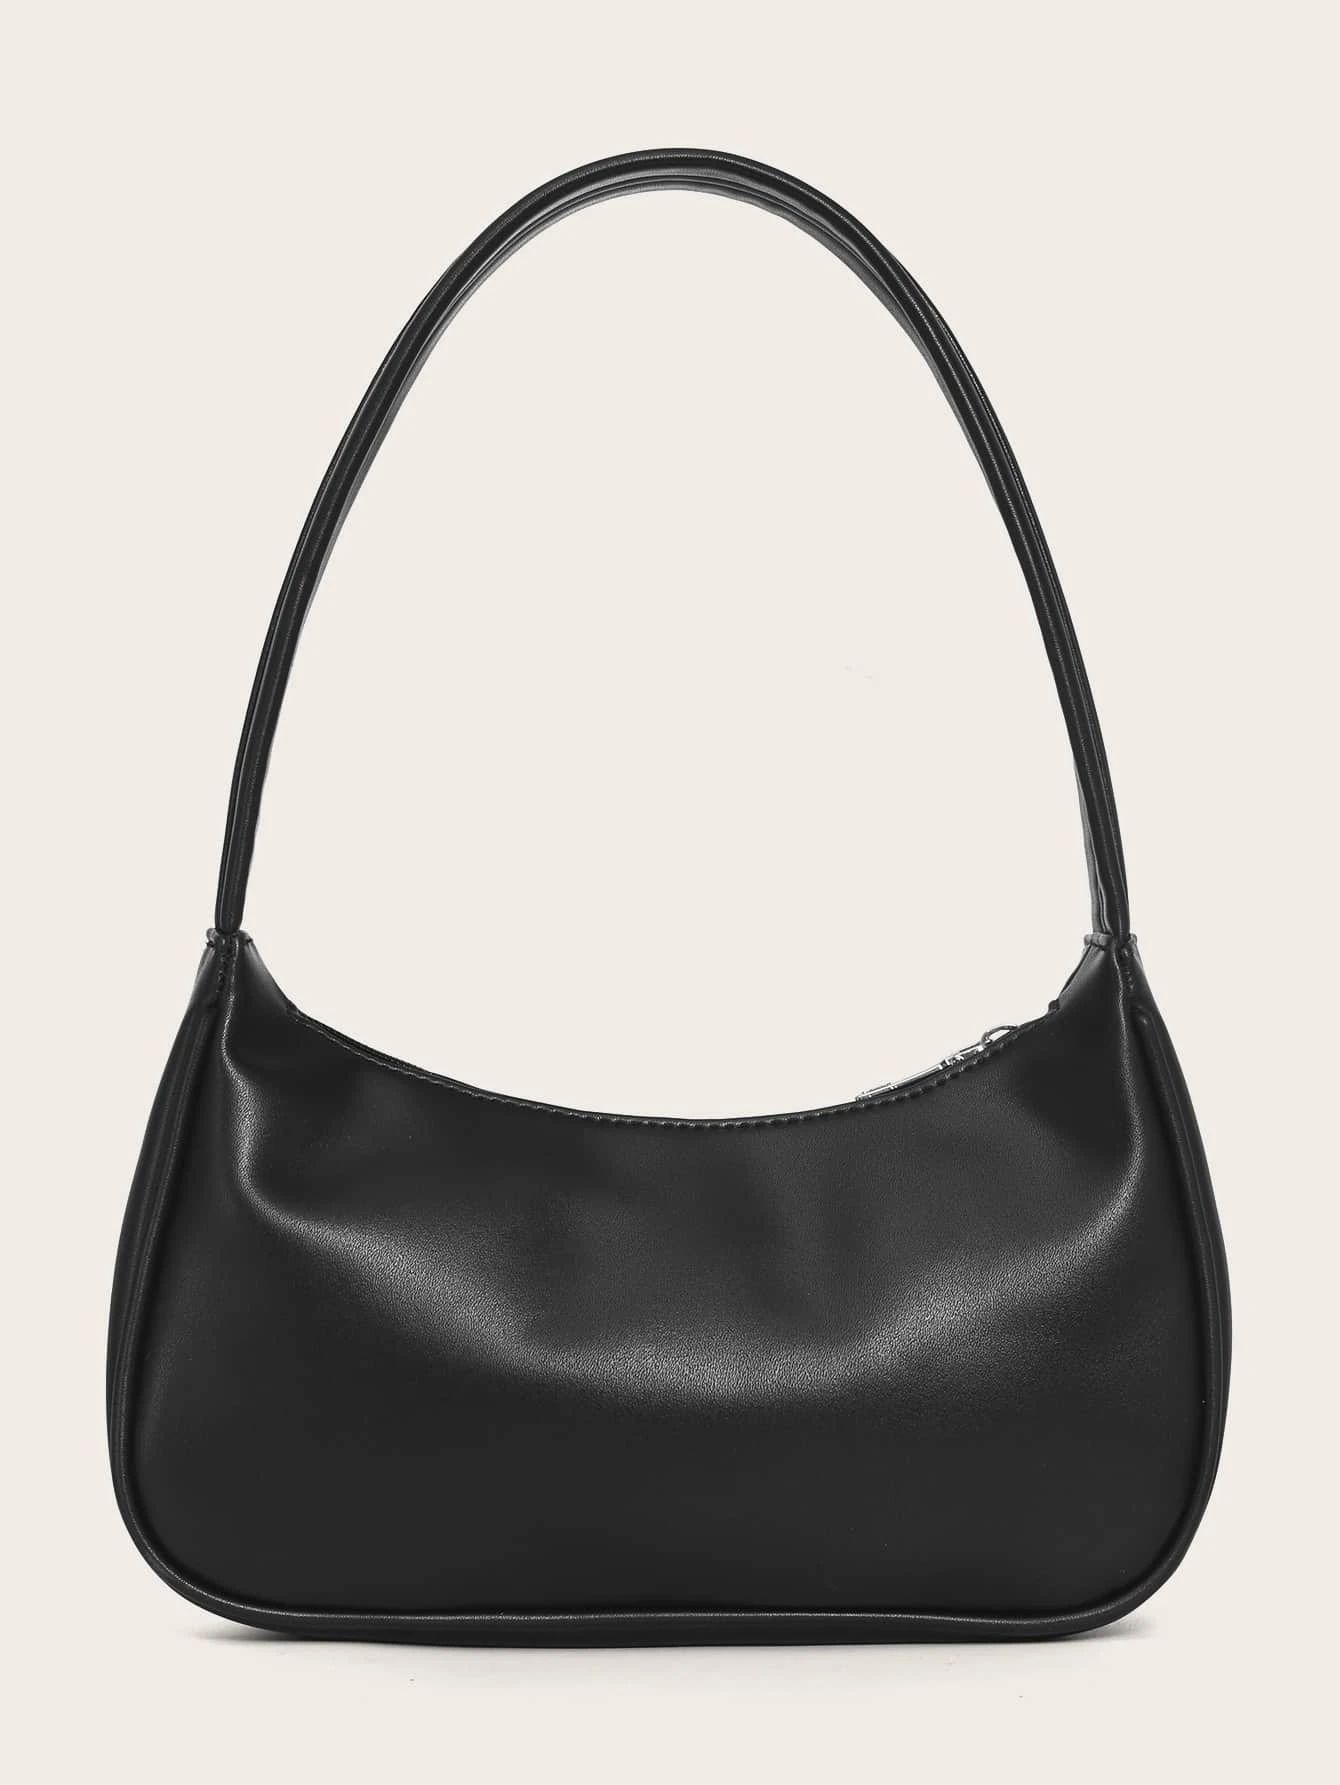 Minimalist Baguette Bag | SHEIN